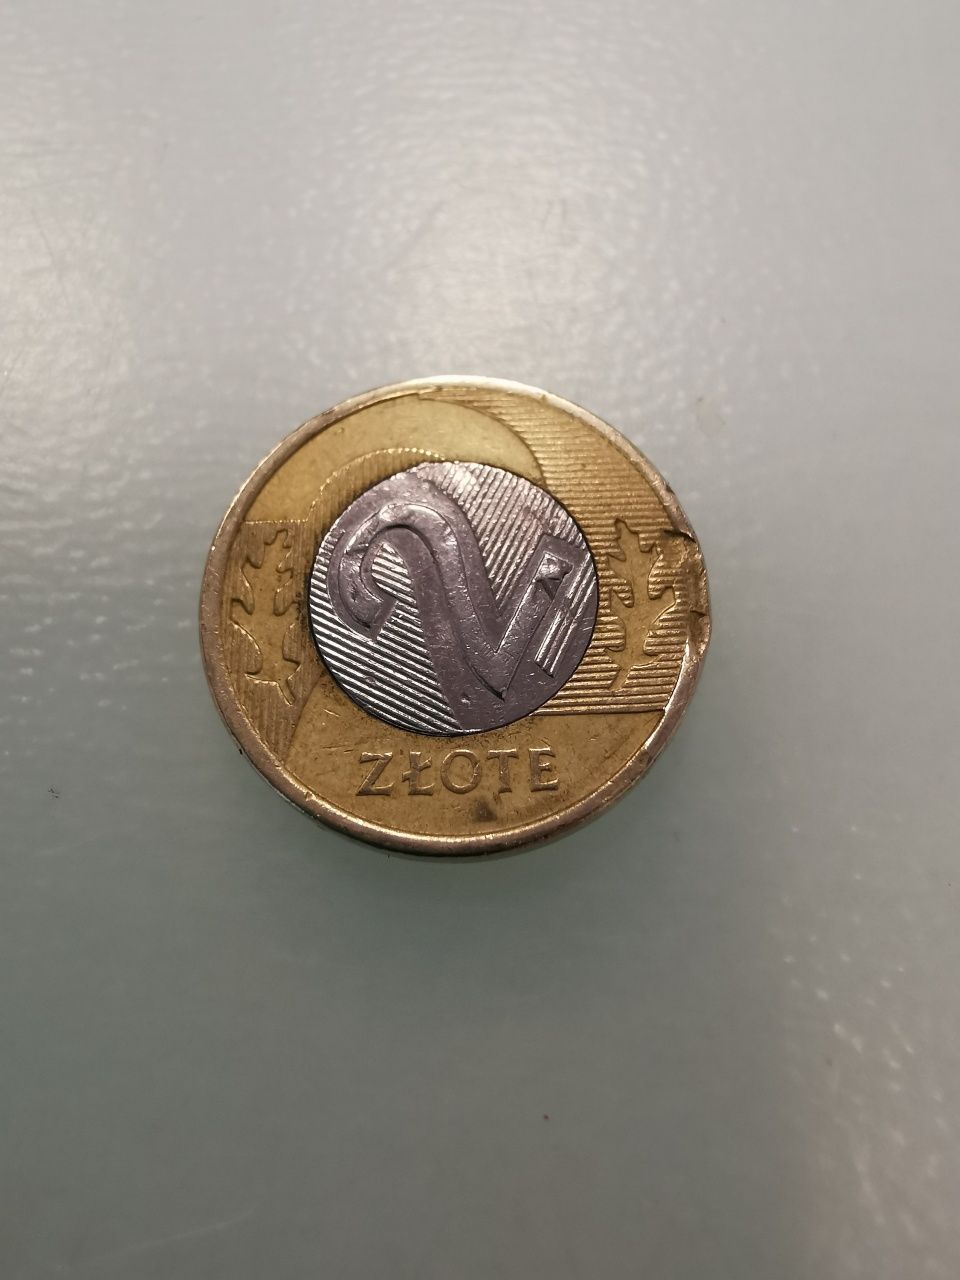 2 zł destrukt - moneta z 2009 roku